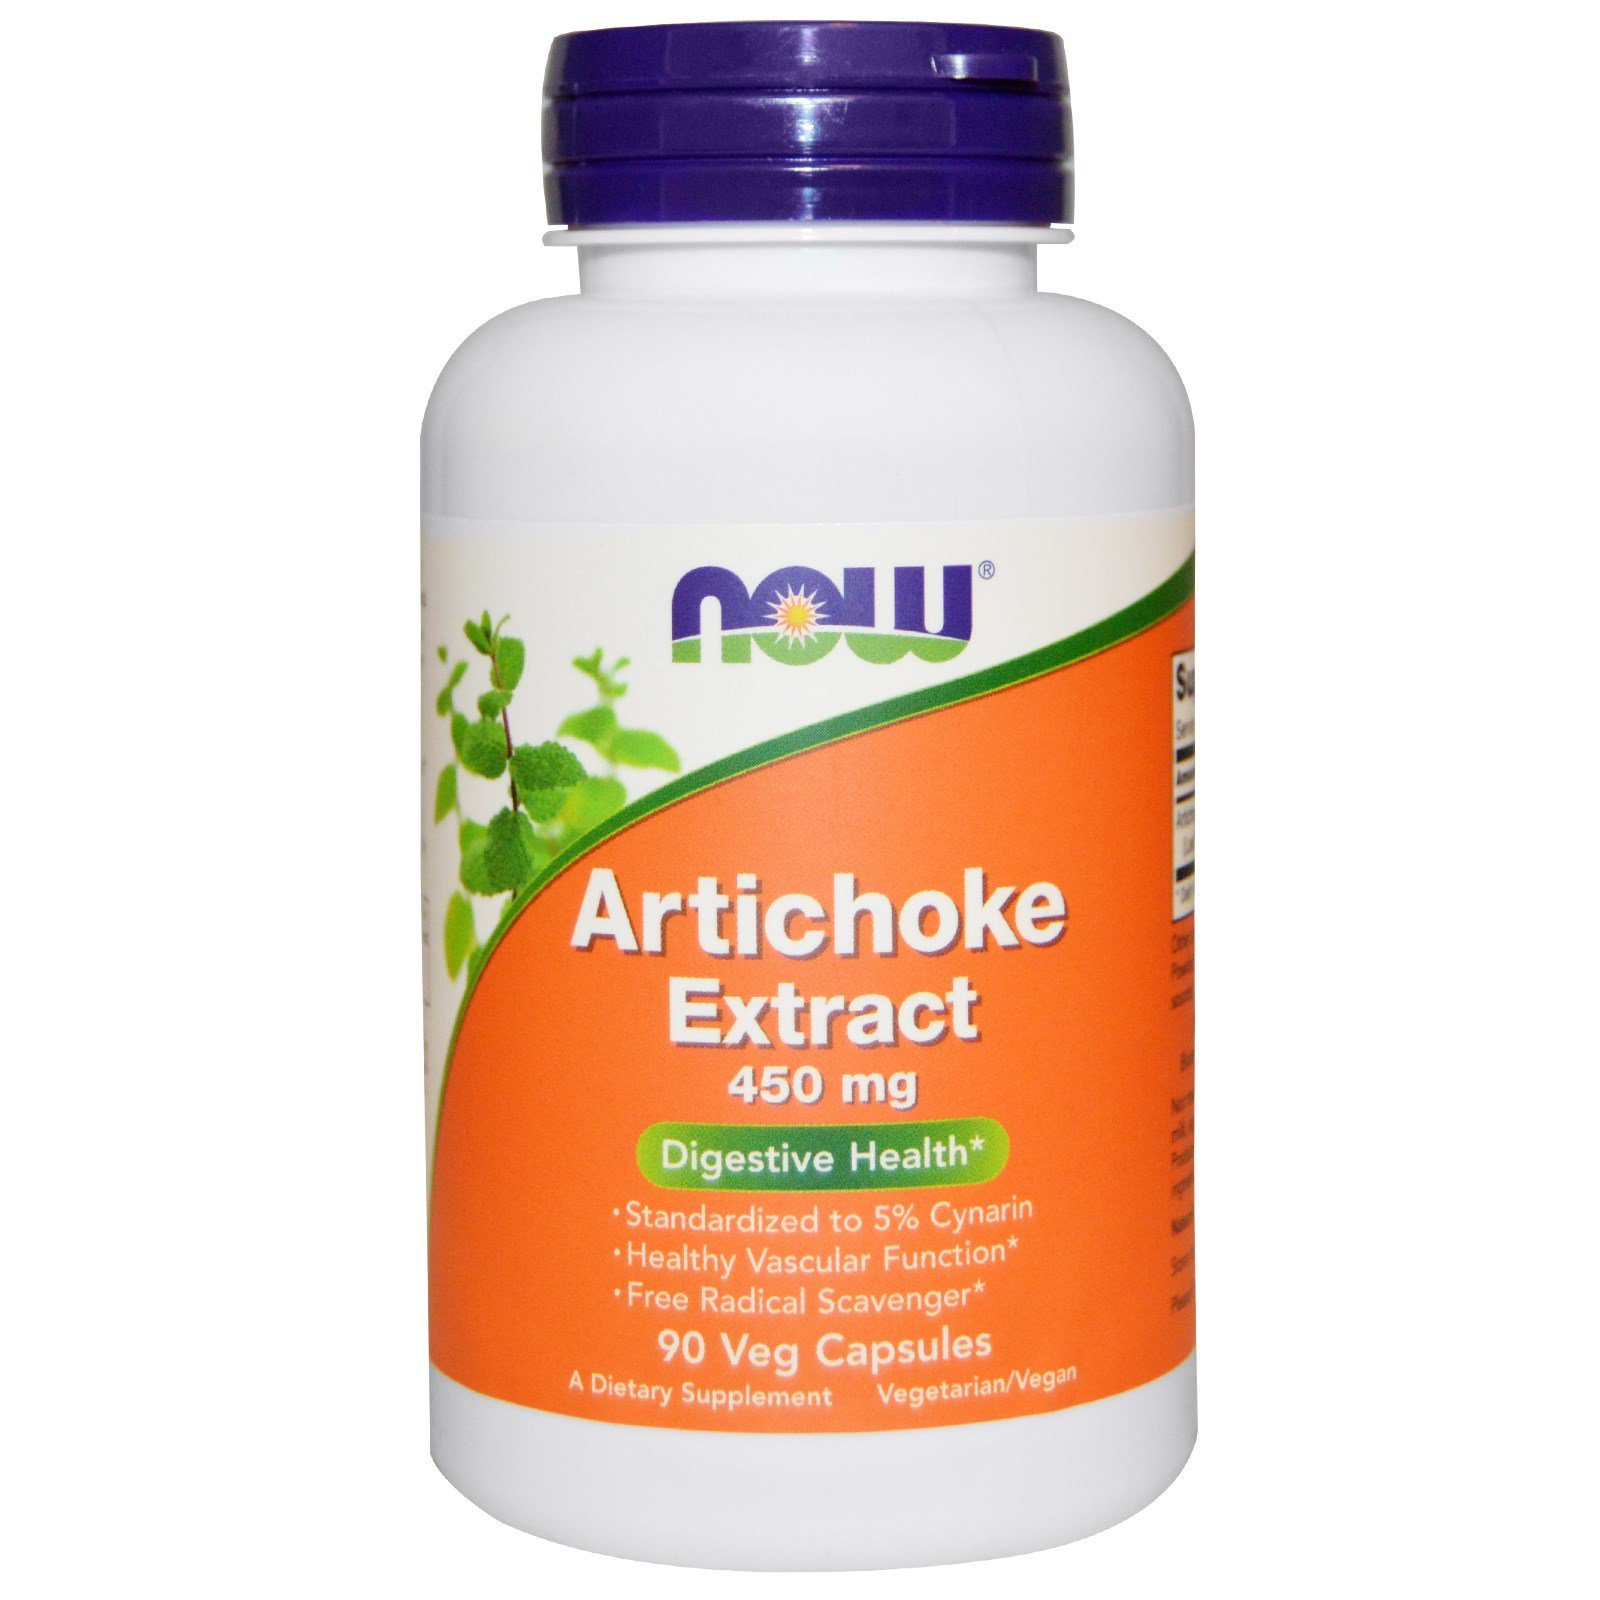 Artichoke Extract, Артишок Экстракт 450 мг - 90 капсул